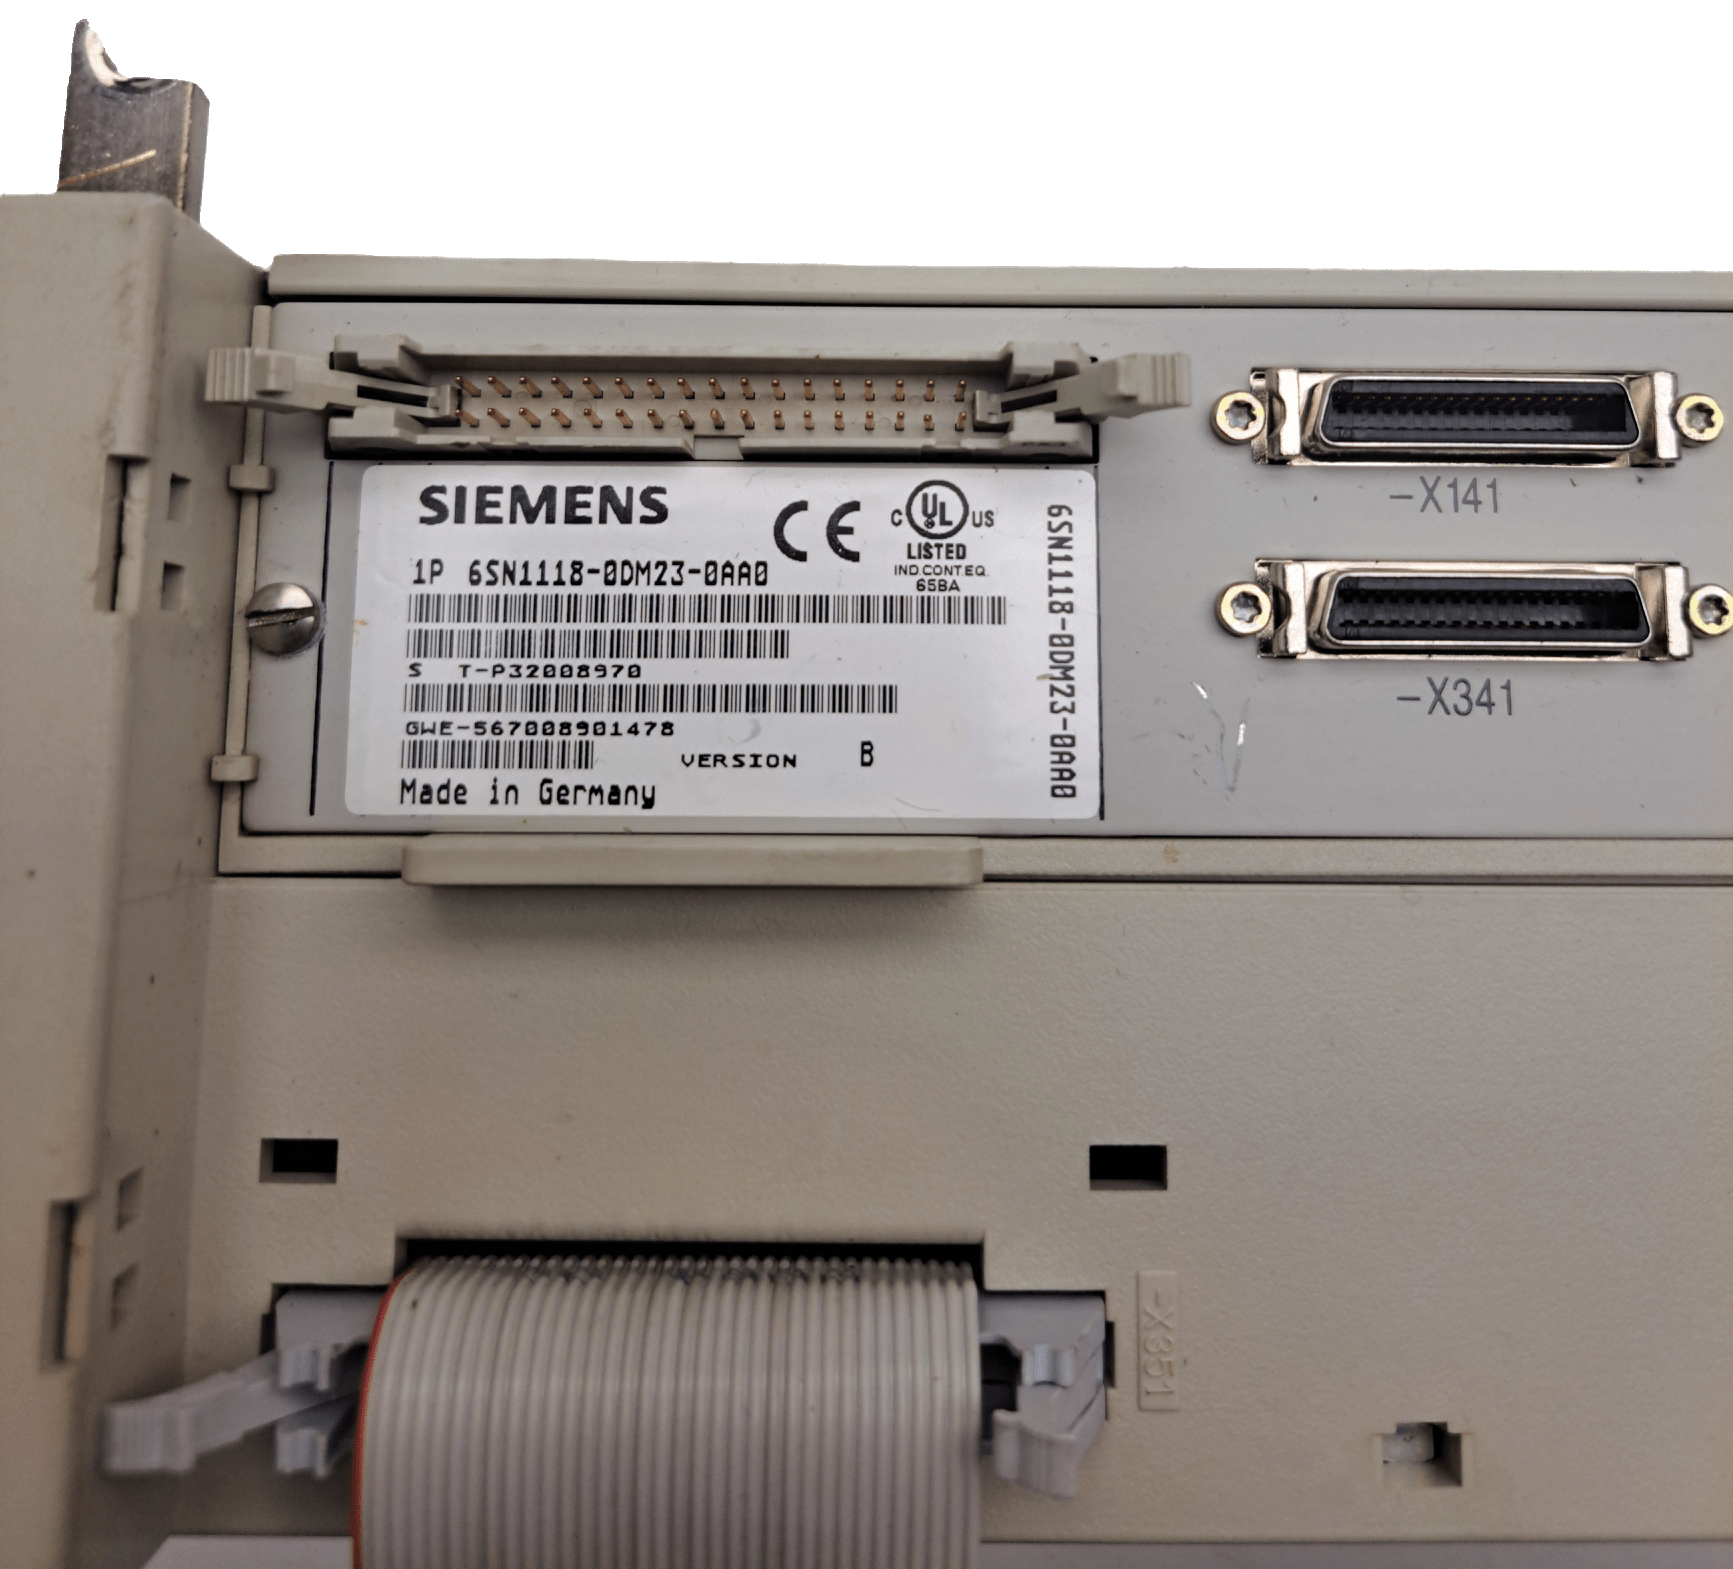 Siemens SIMODRIVE 611 6SN1123-1AA00-0DA0 / 6SN1118-0DM23-0AA0 - #product_category# | Klenk Maschinenhandel